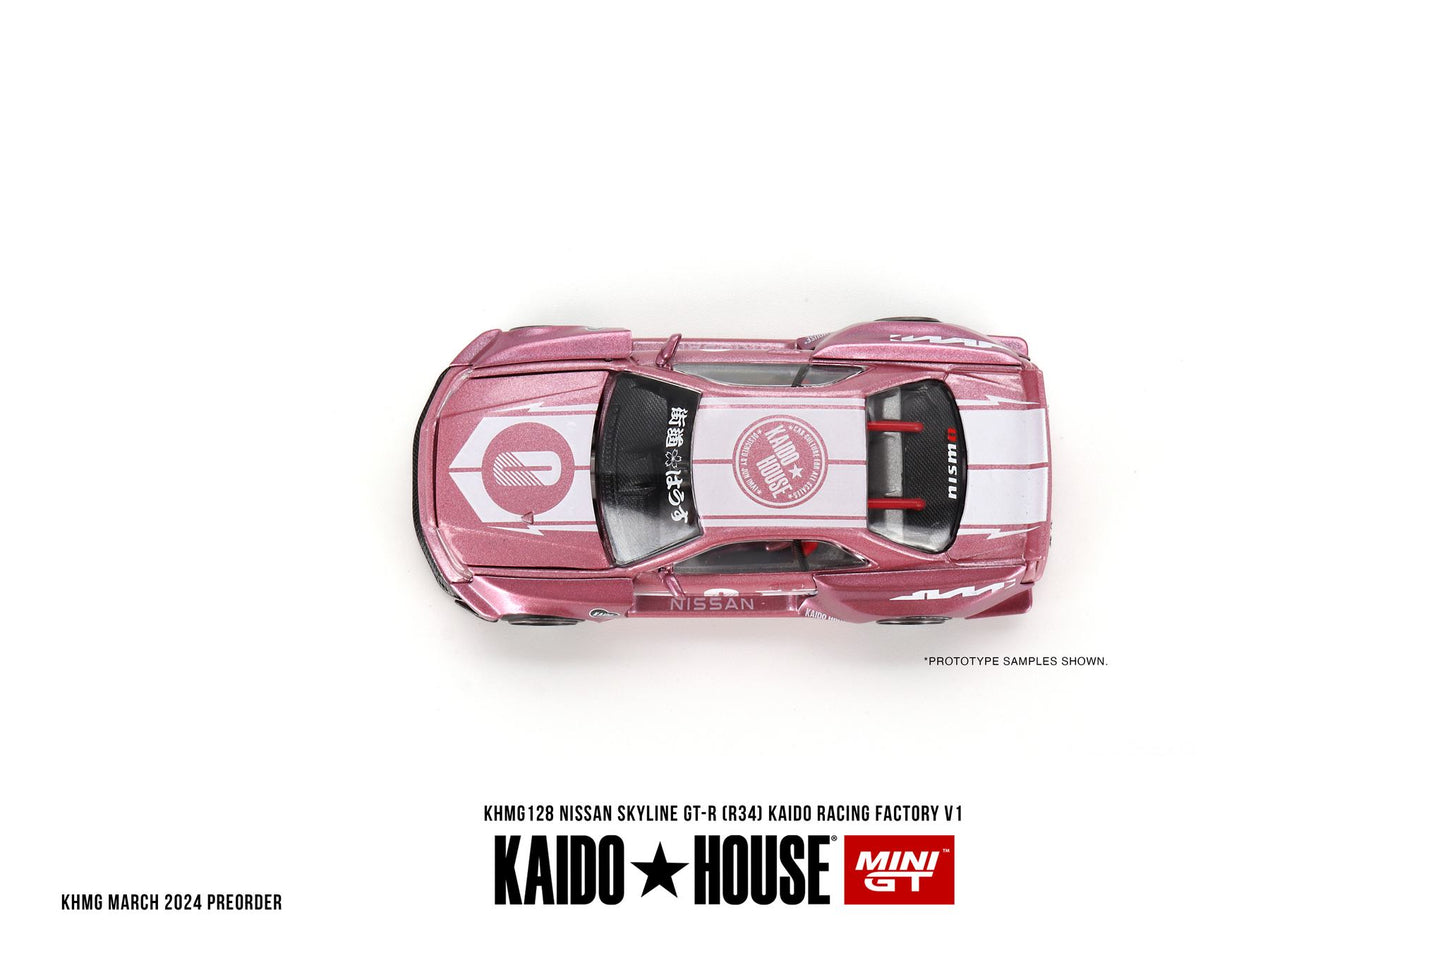 Mini GT x Kaido House Nissan Skyline GT-R (R34) Kaido Racing Factory V1